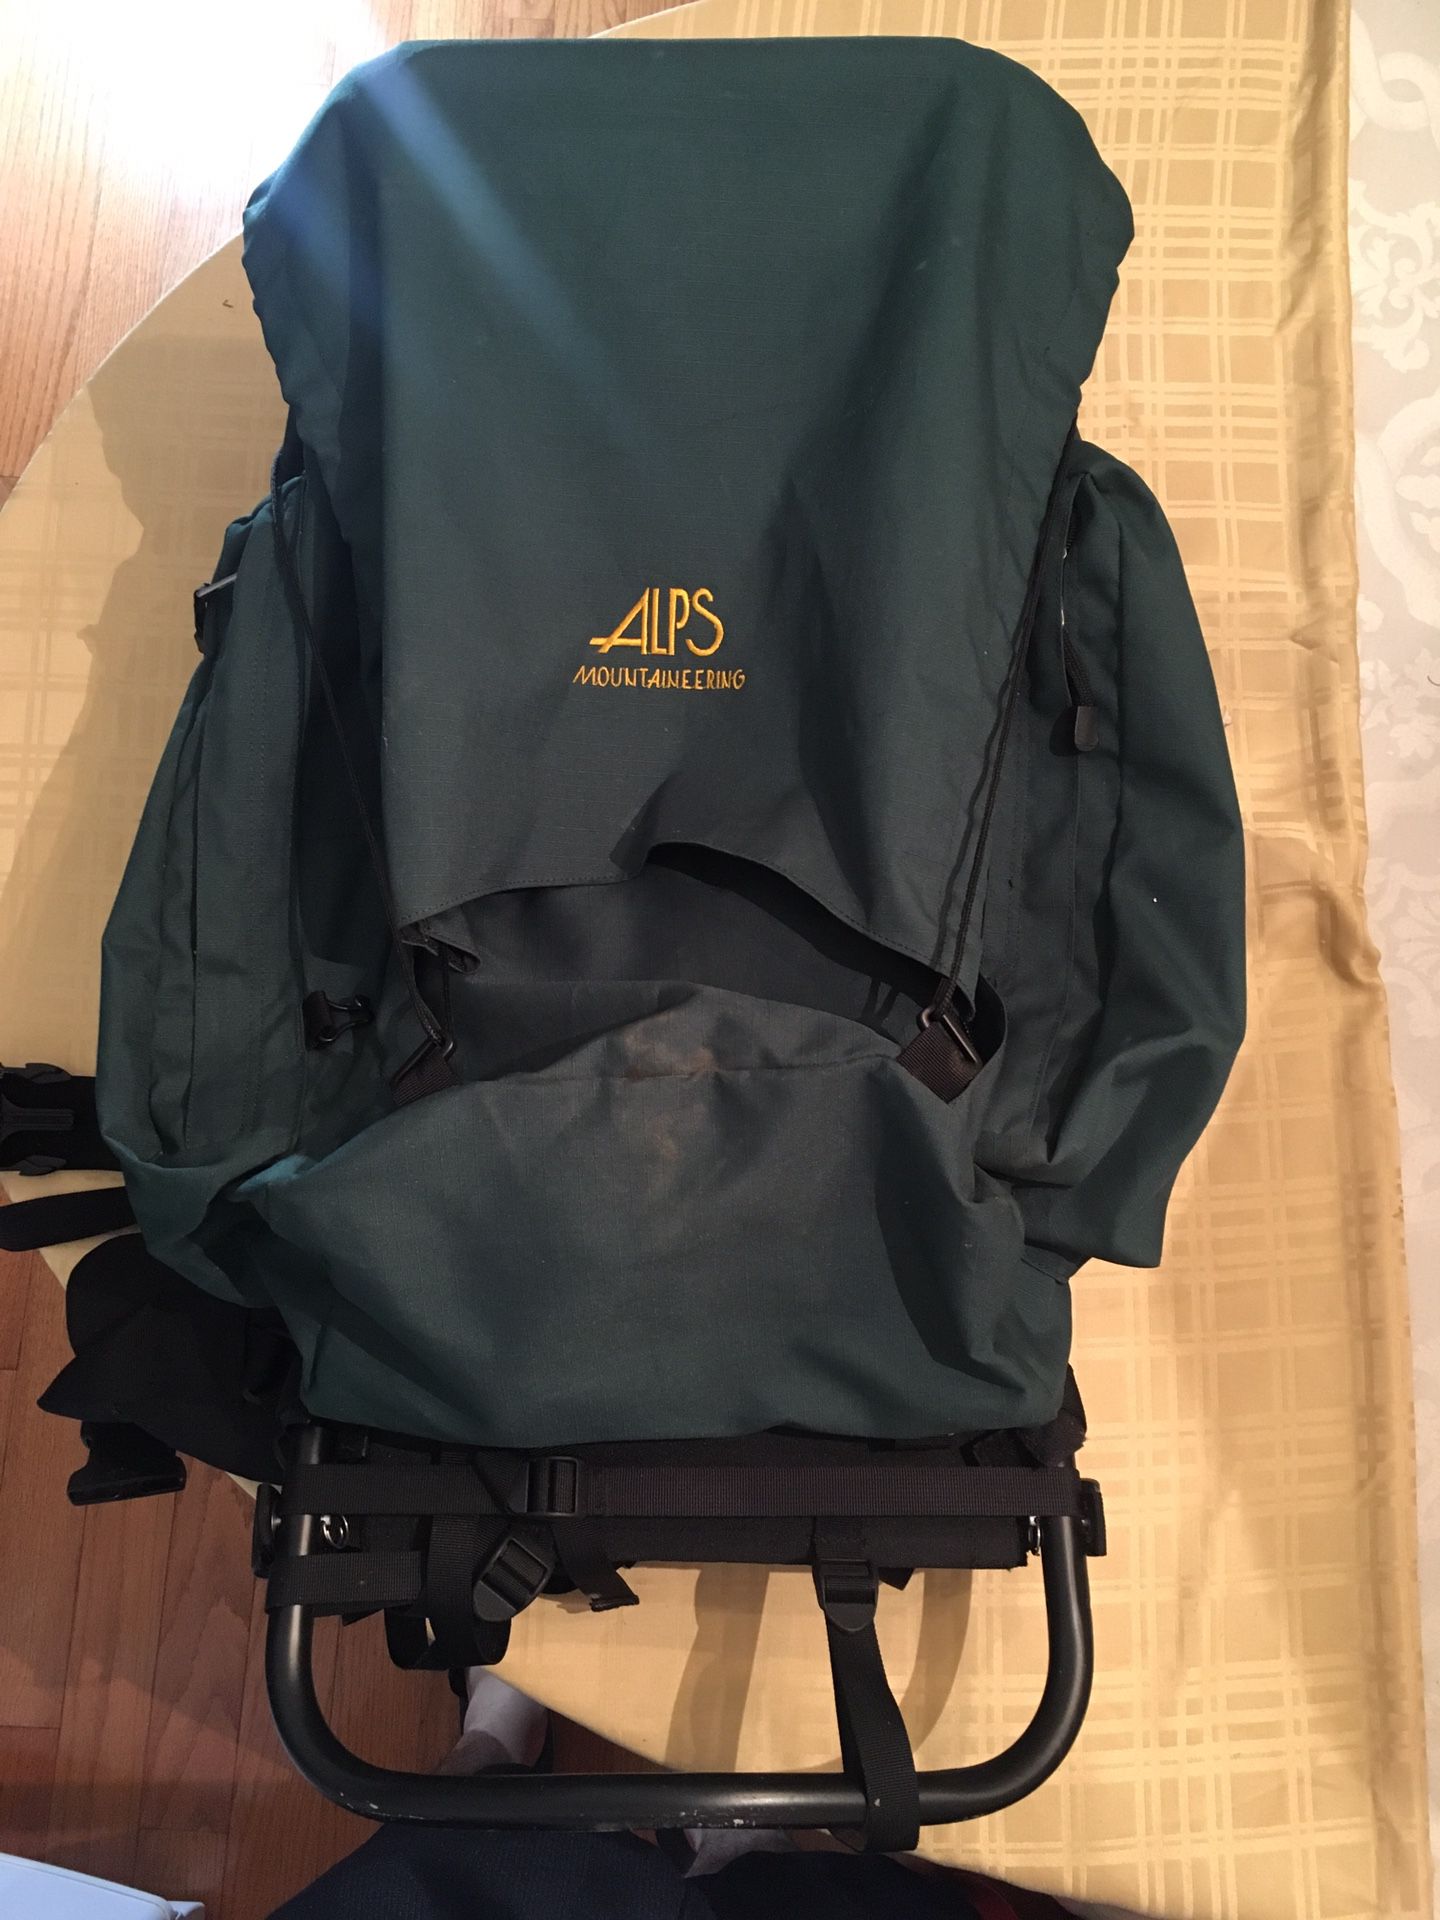 Alps external frame backpack